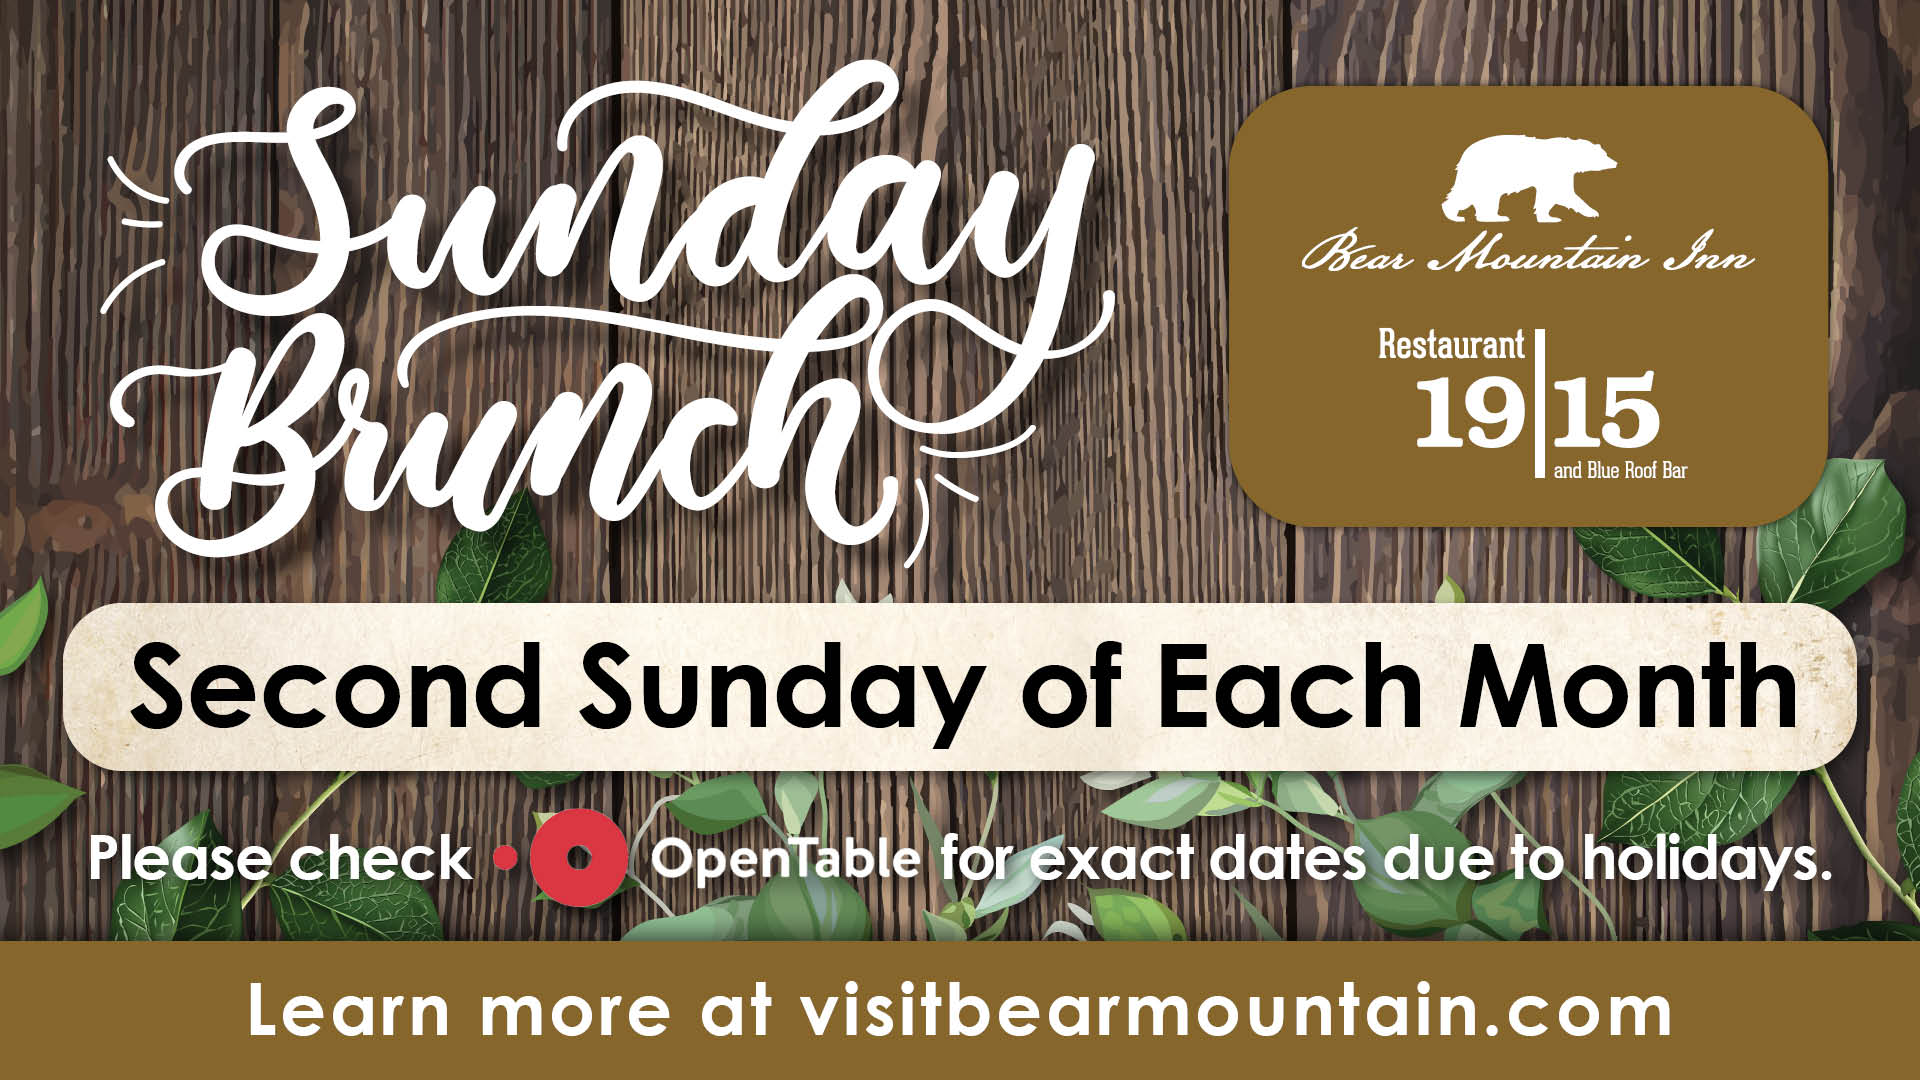 Sunday Brunch Bear Mountain Inn